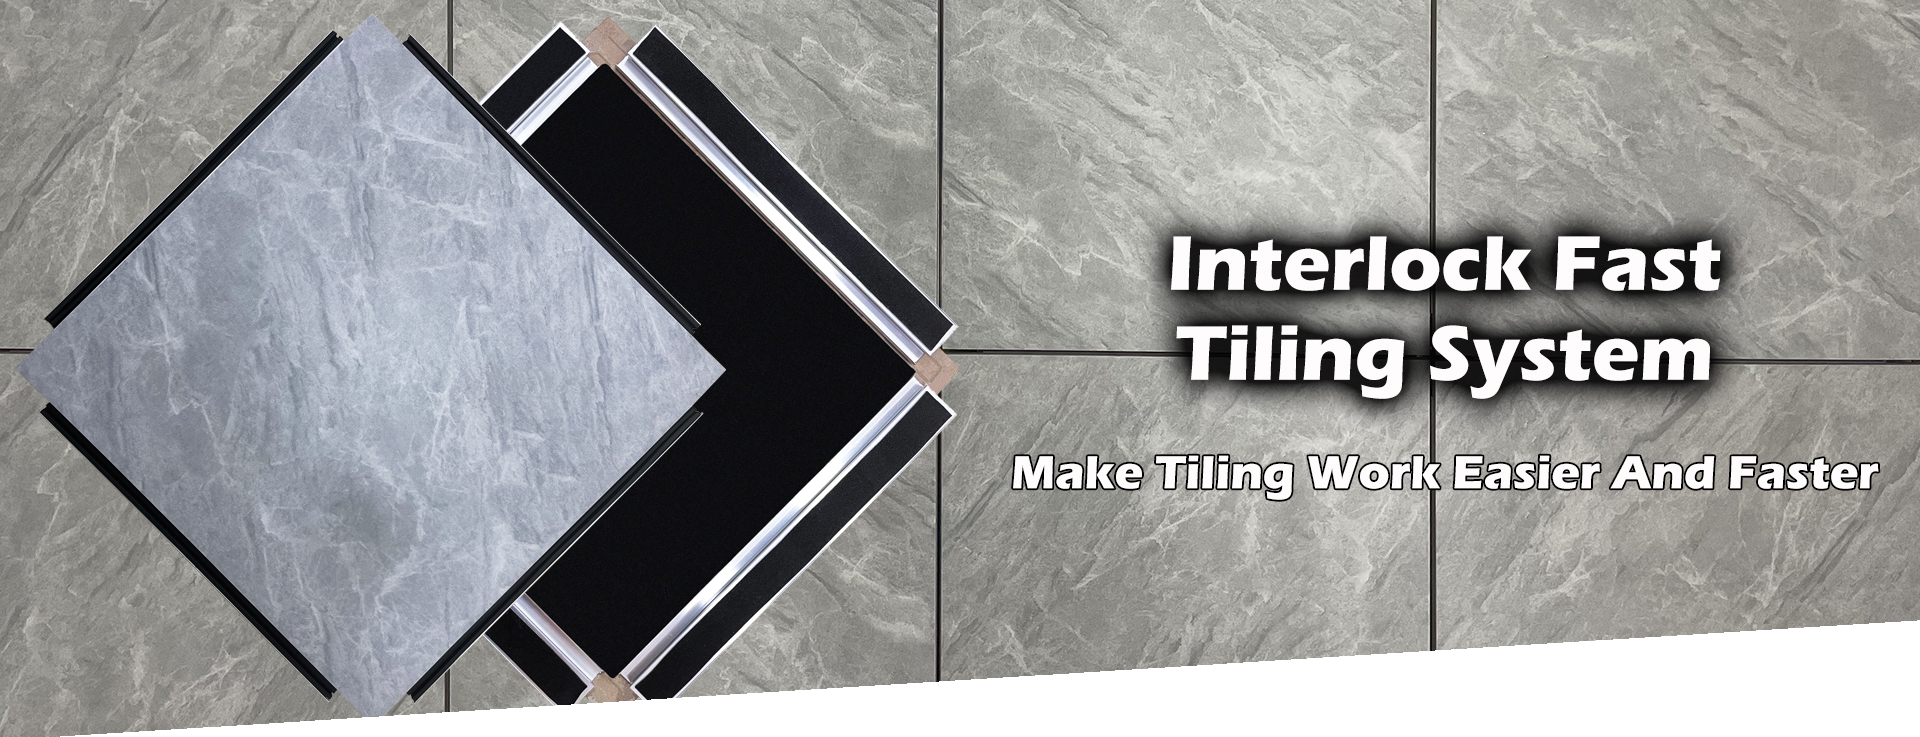 Interlock Fast Tiling System